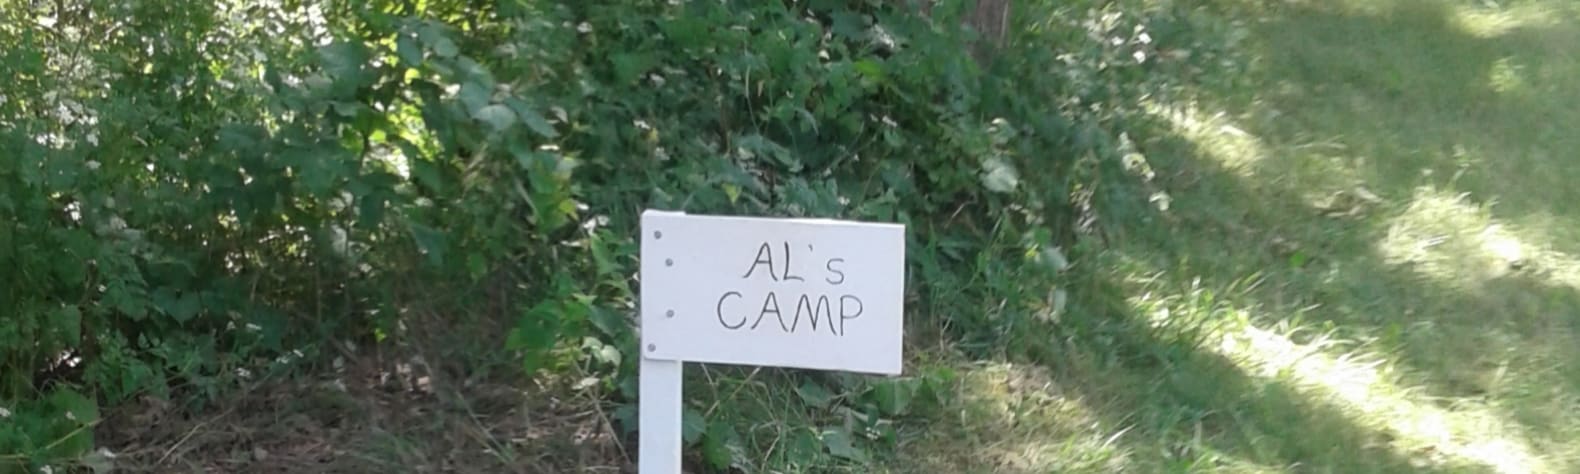 Al 's camp